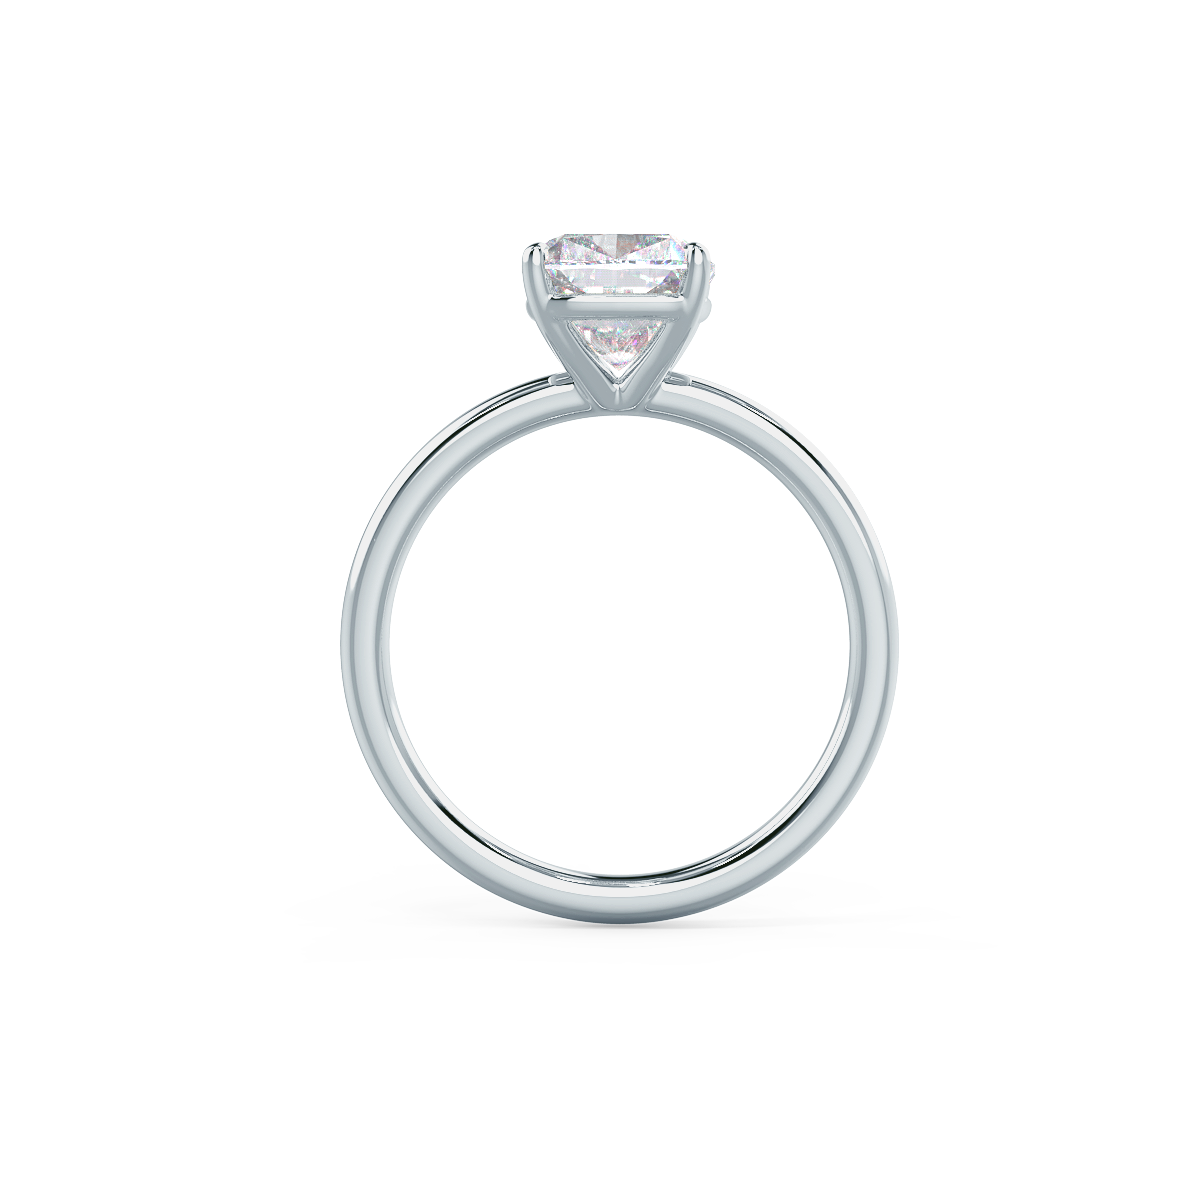 KISSEN PETITE FOUR CRONG SOLITAIRE Lab grown Diamond Ring DEF Color VS+ Clarity